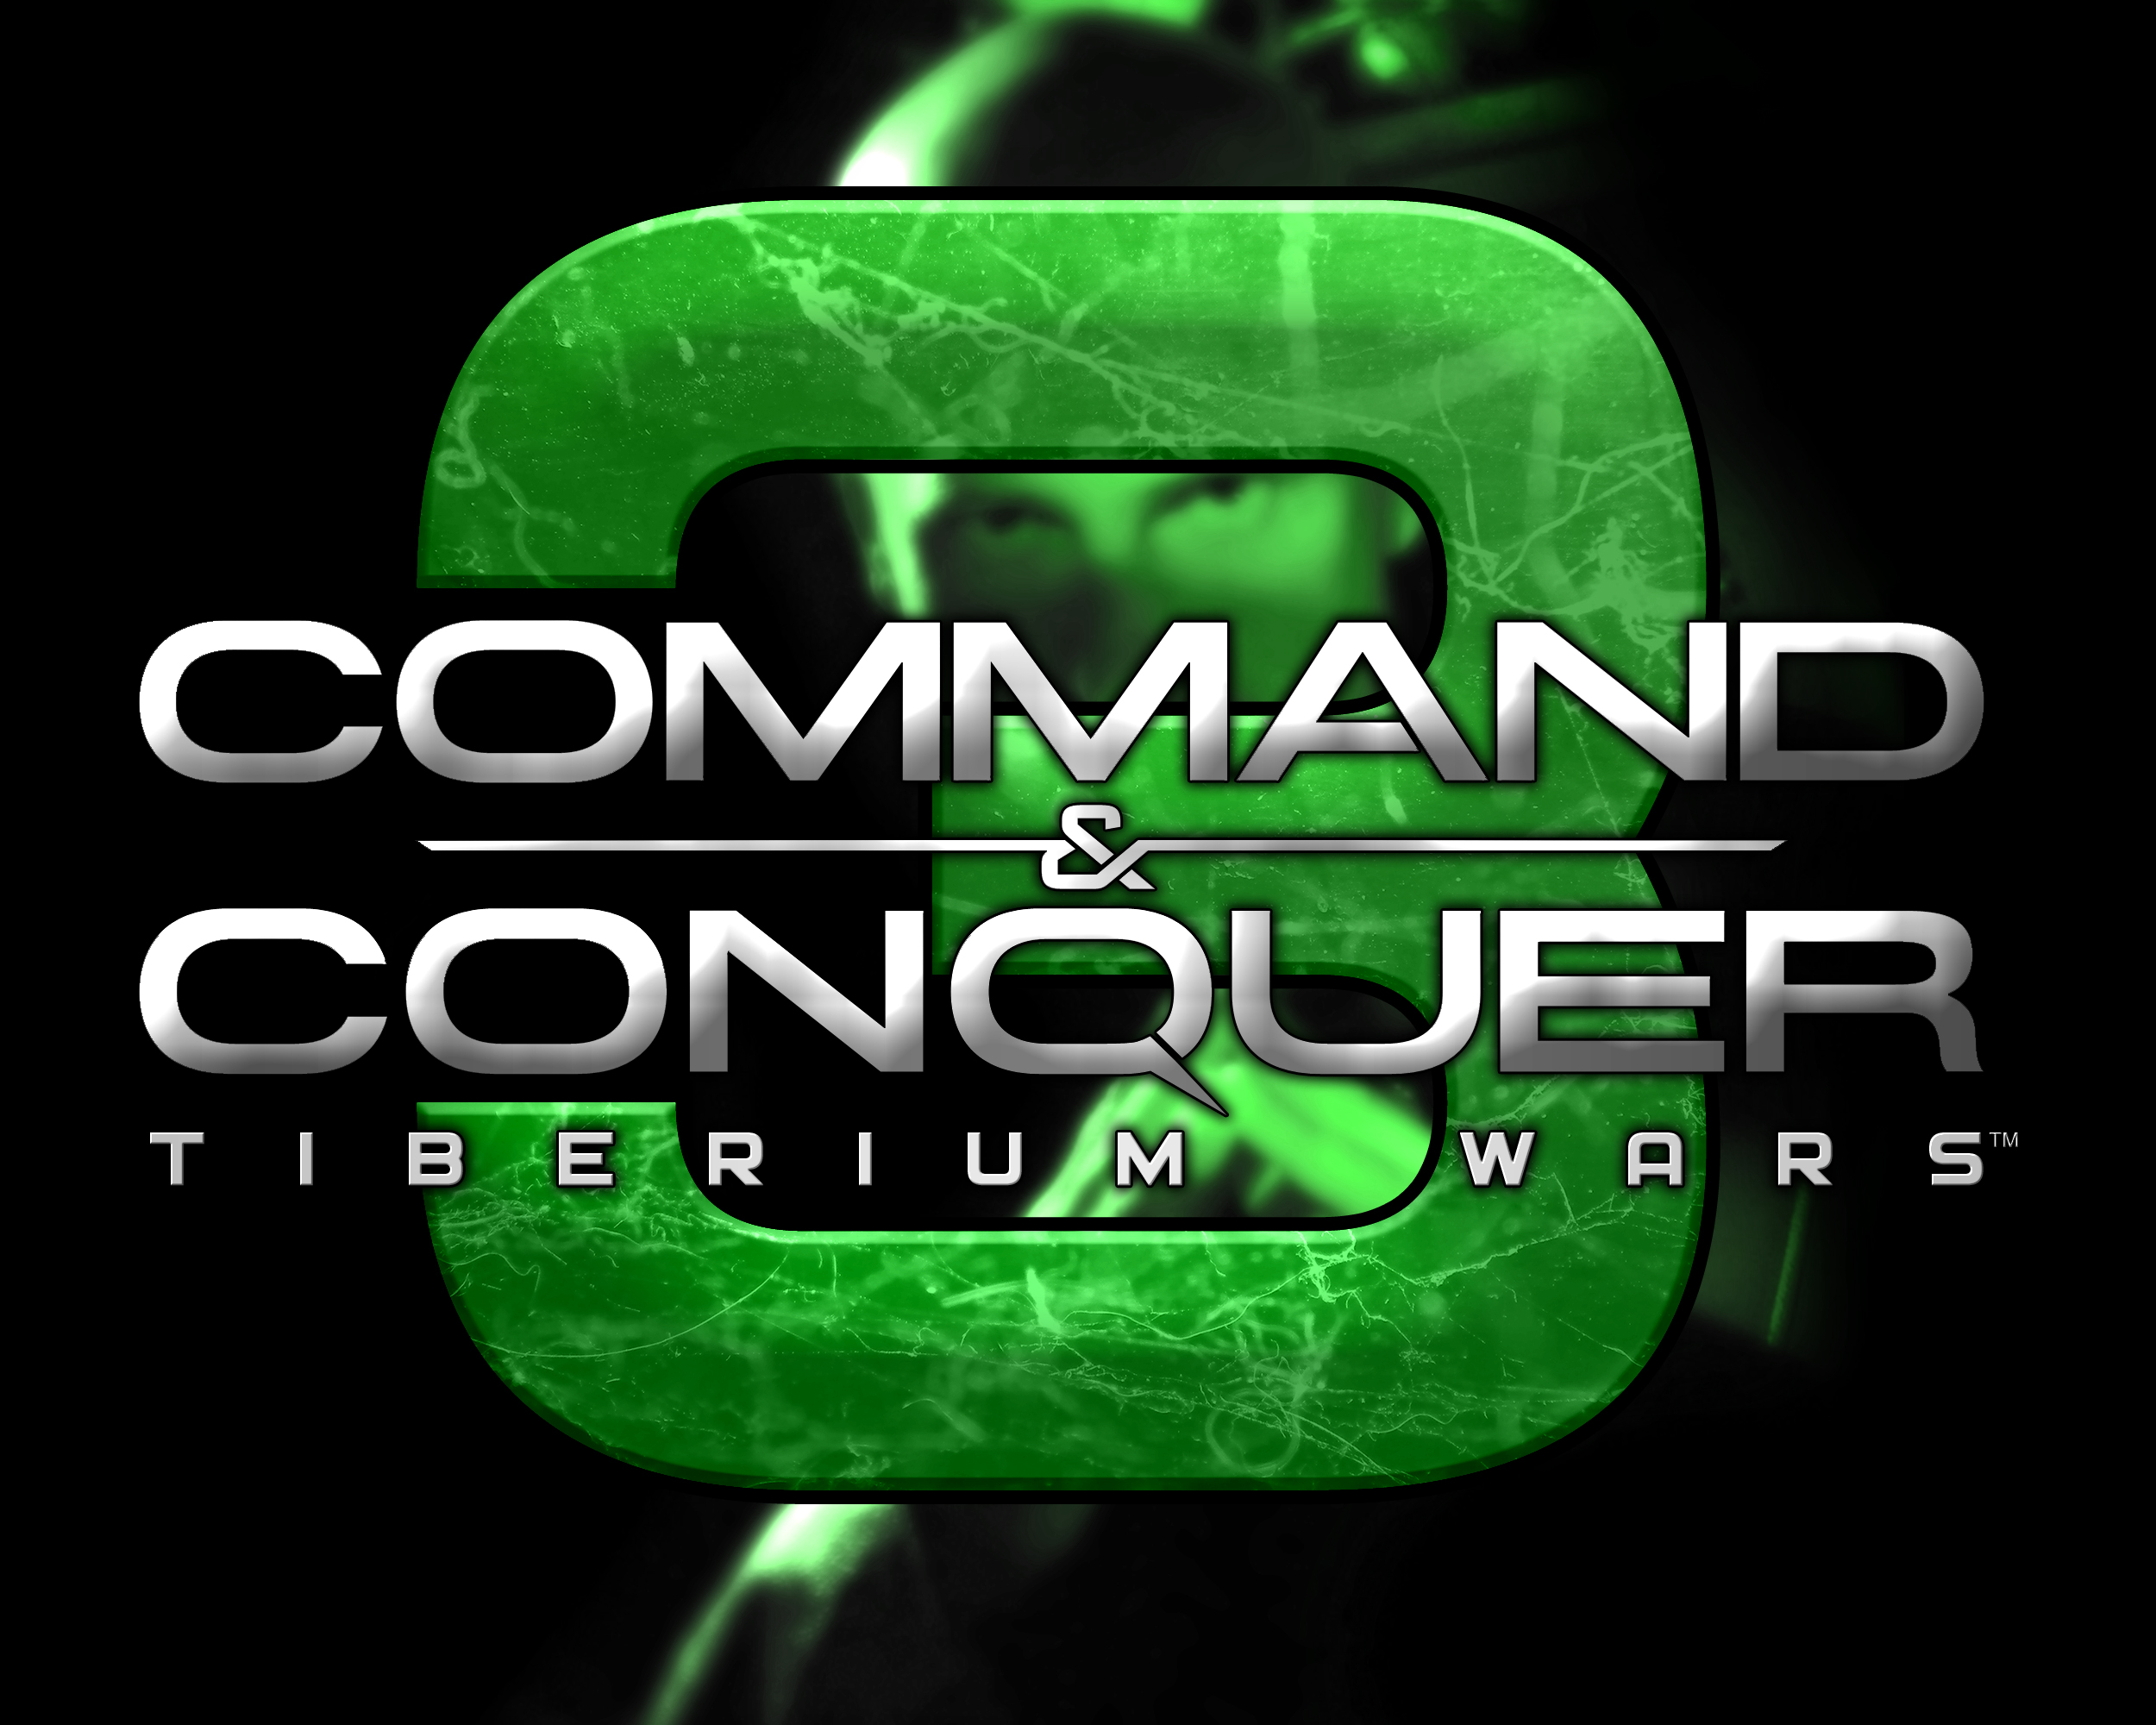 Command And Conquer 3 Tiberium Wars | НОД | Кровавый кратер